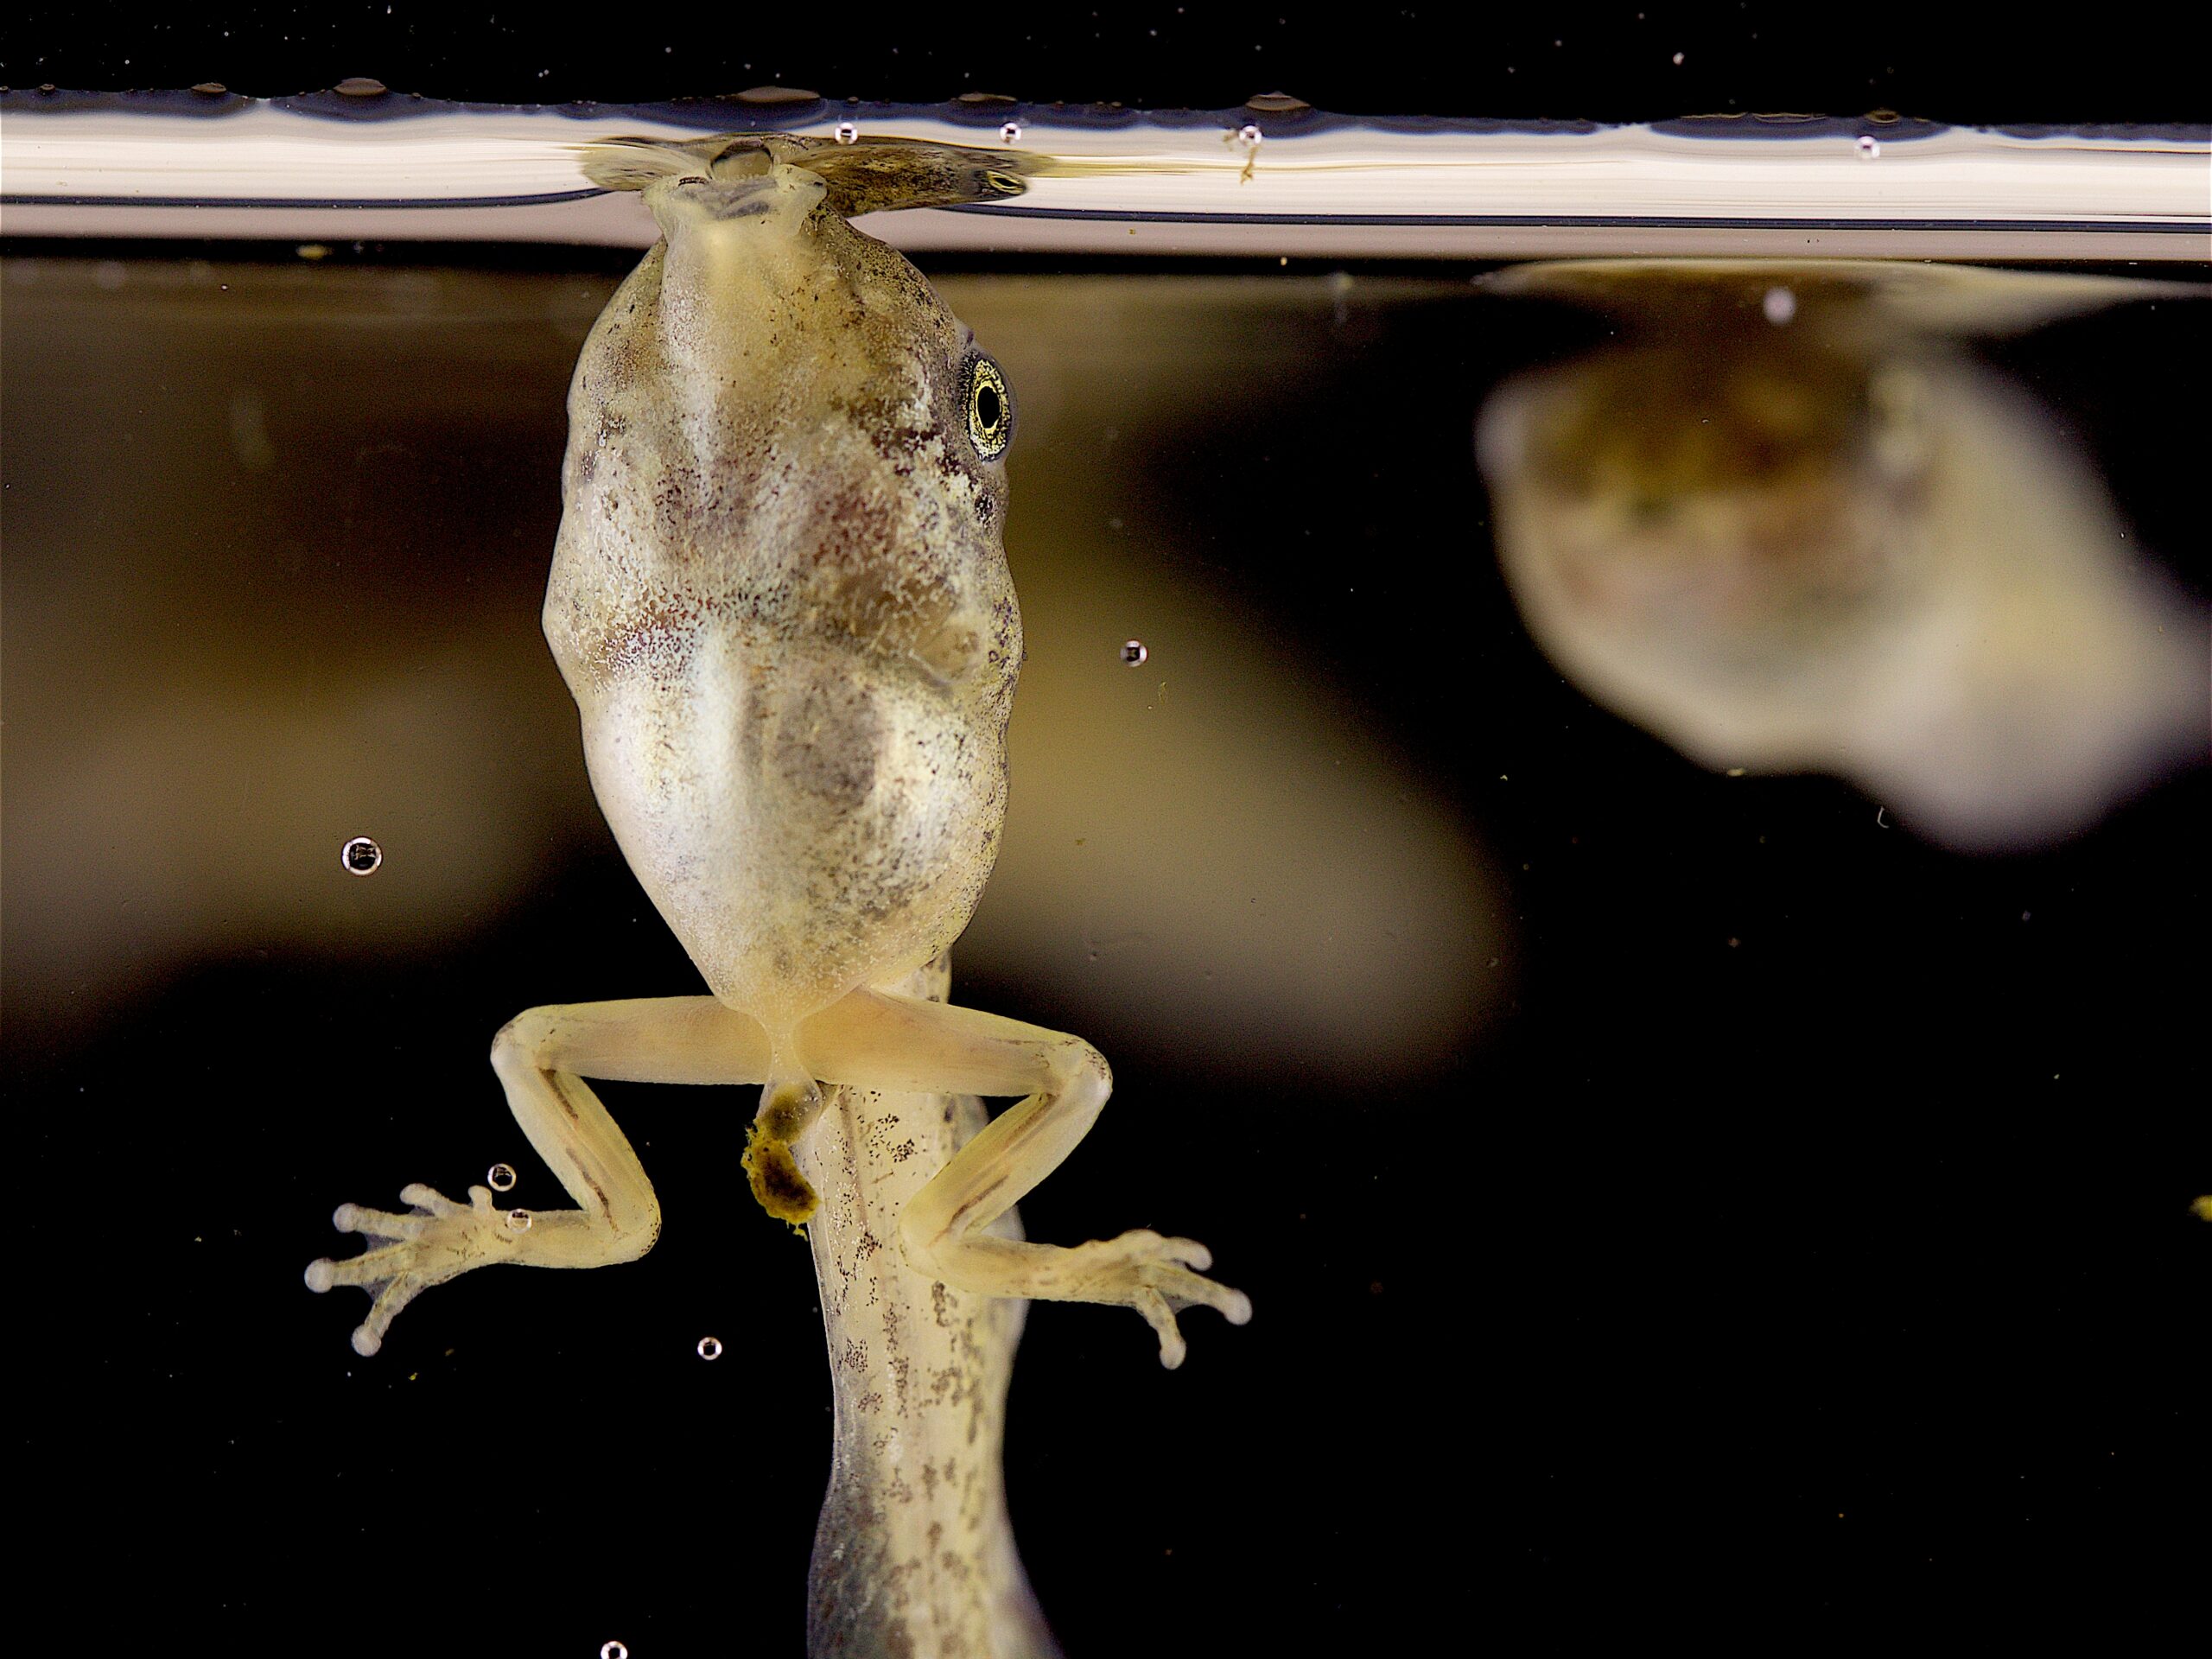 Watch tiny tadpoles breathe by ‘bubble sucking’